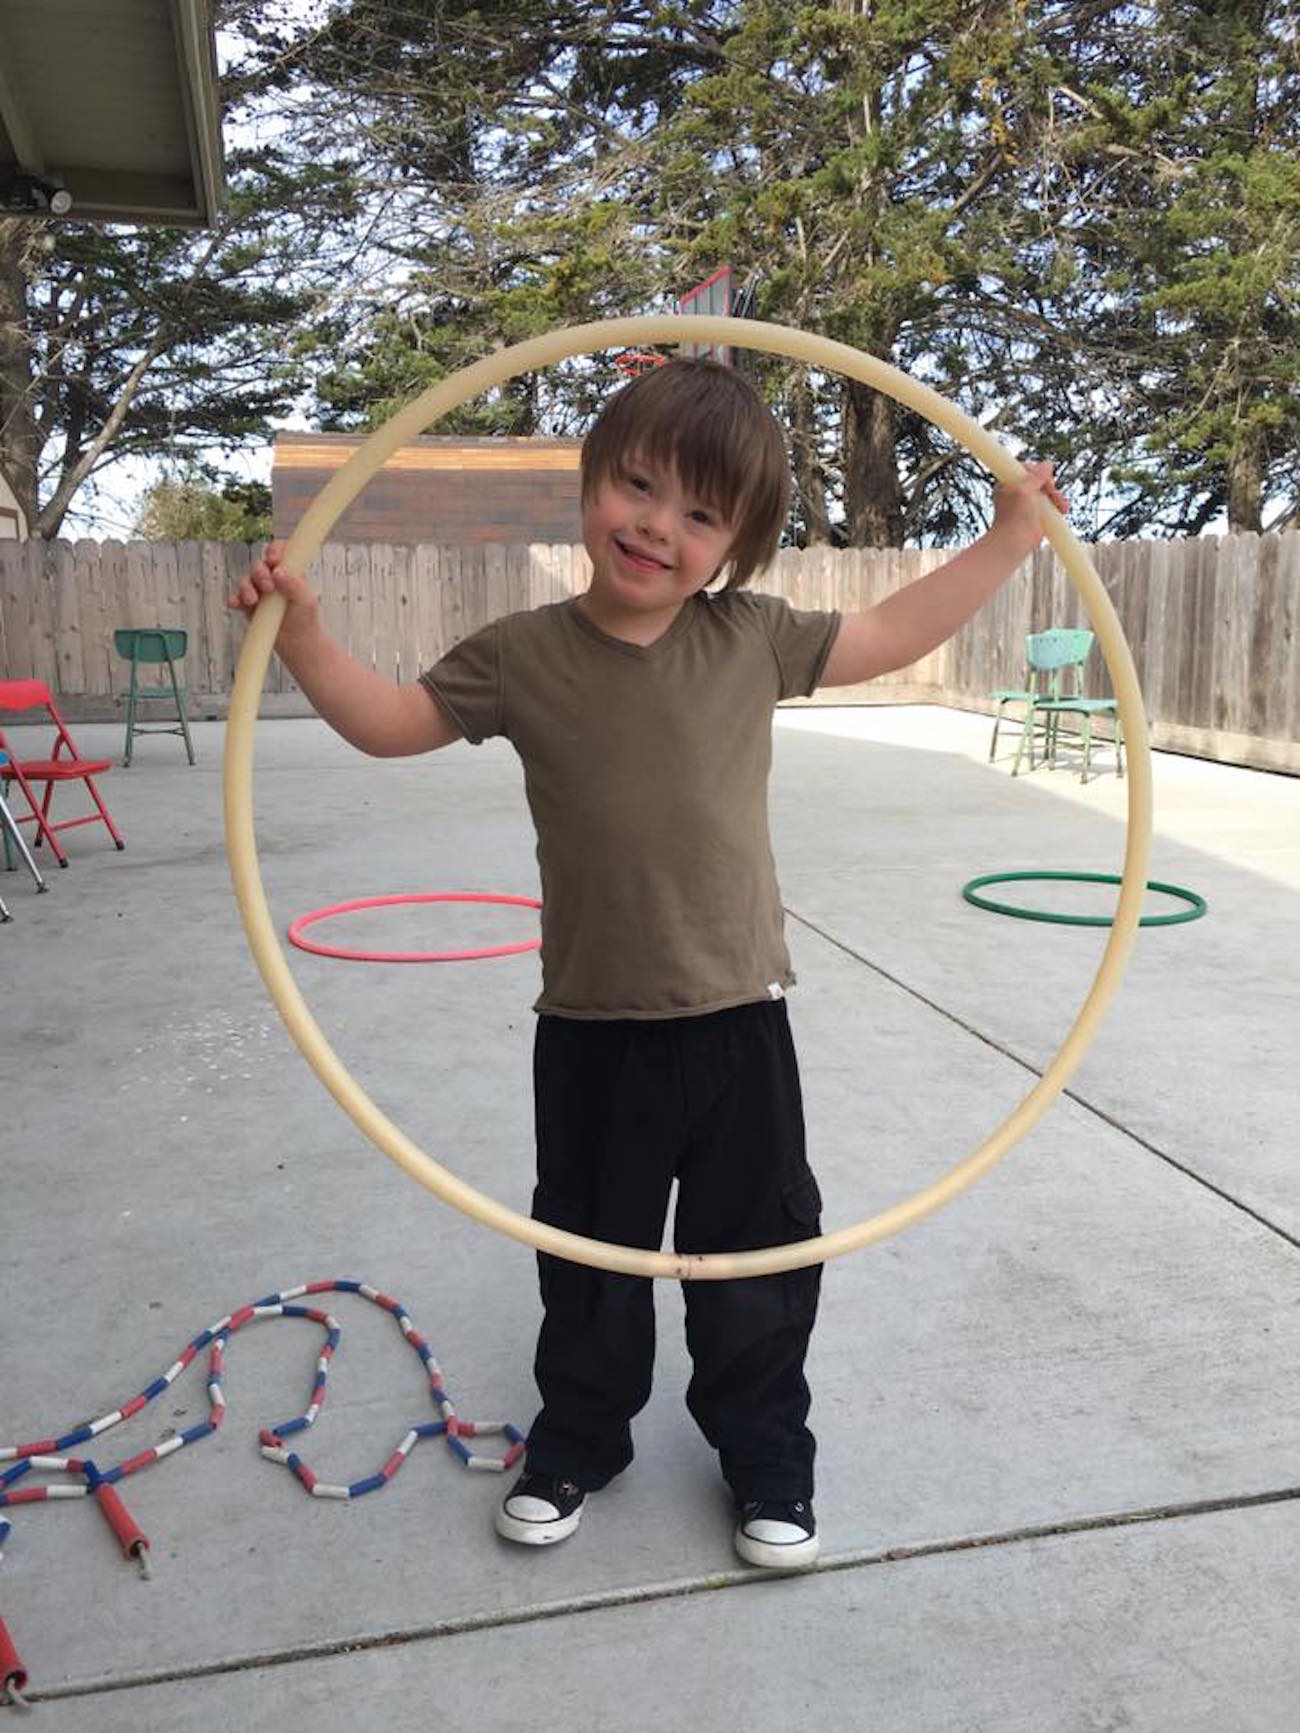 Boy standing in backyard with hula hoop